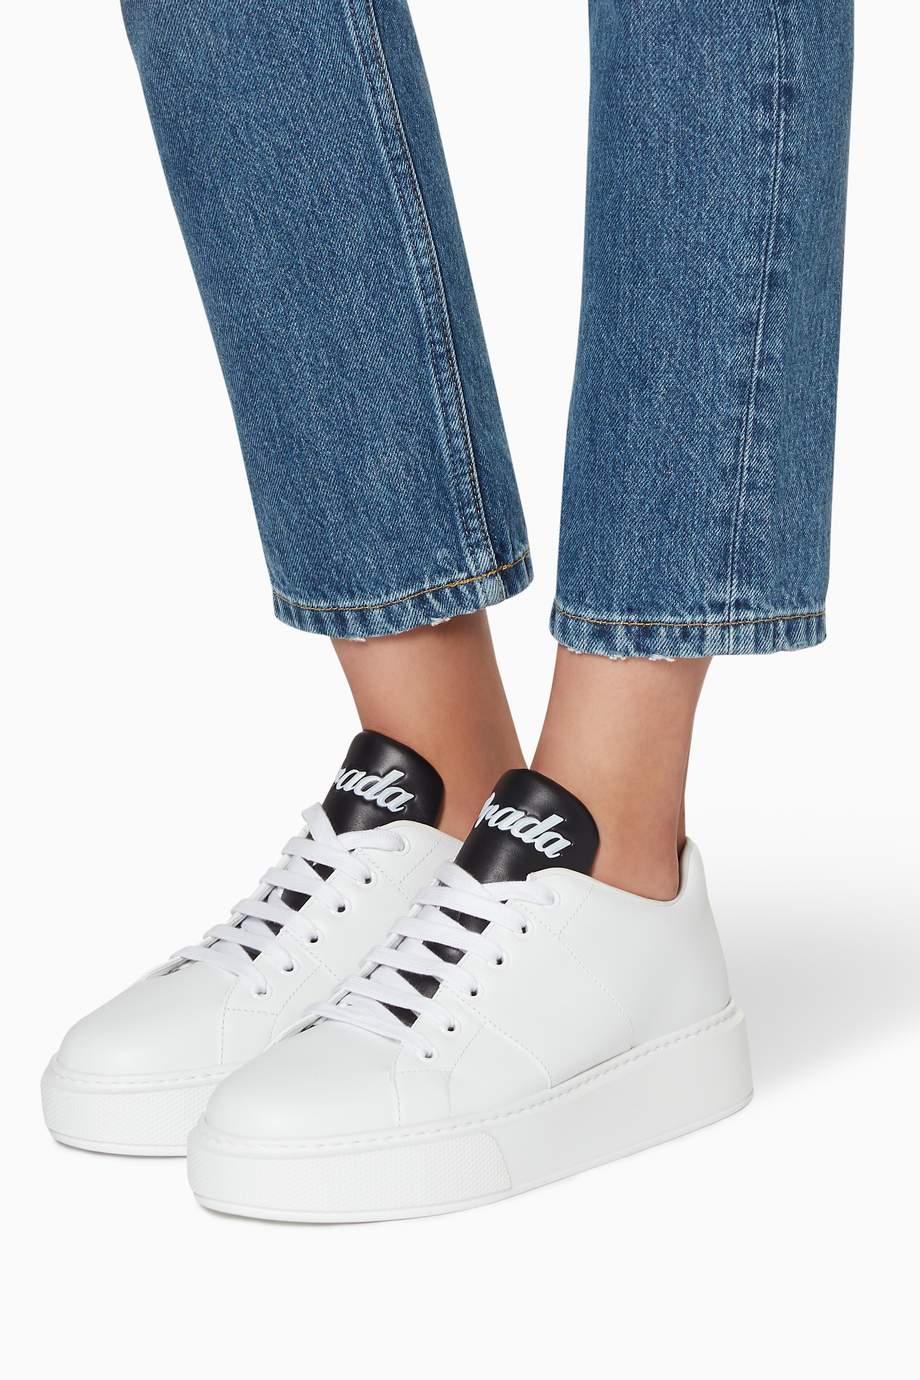 Shop Prada White Leather Flatform Sneakers for Women | Ounass Oman